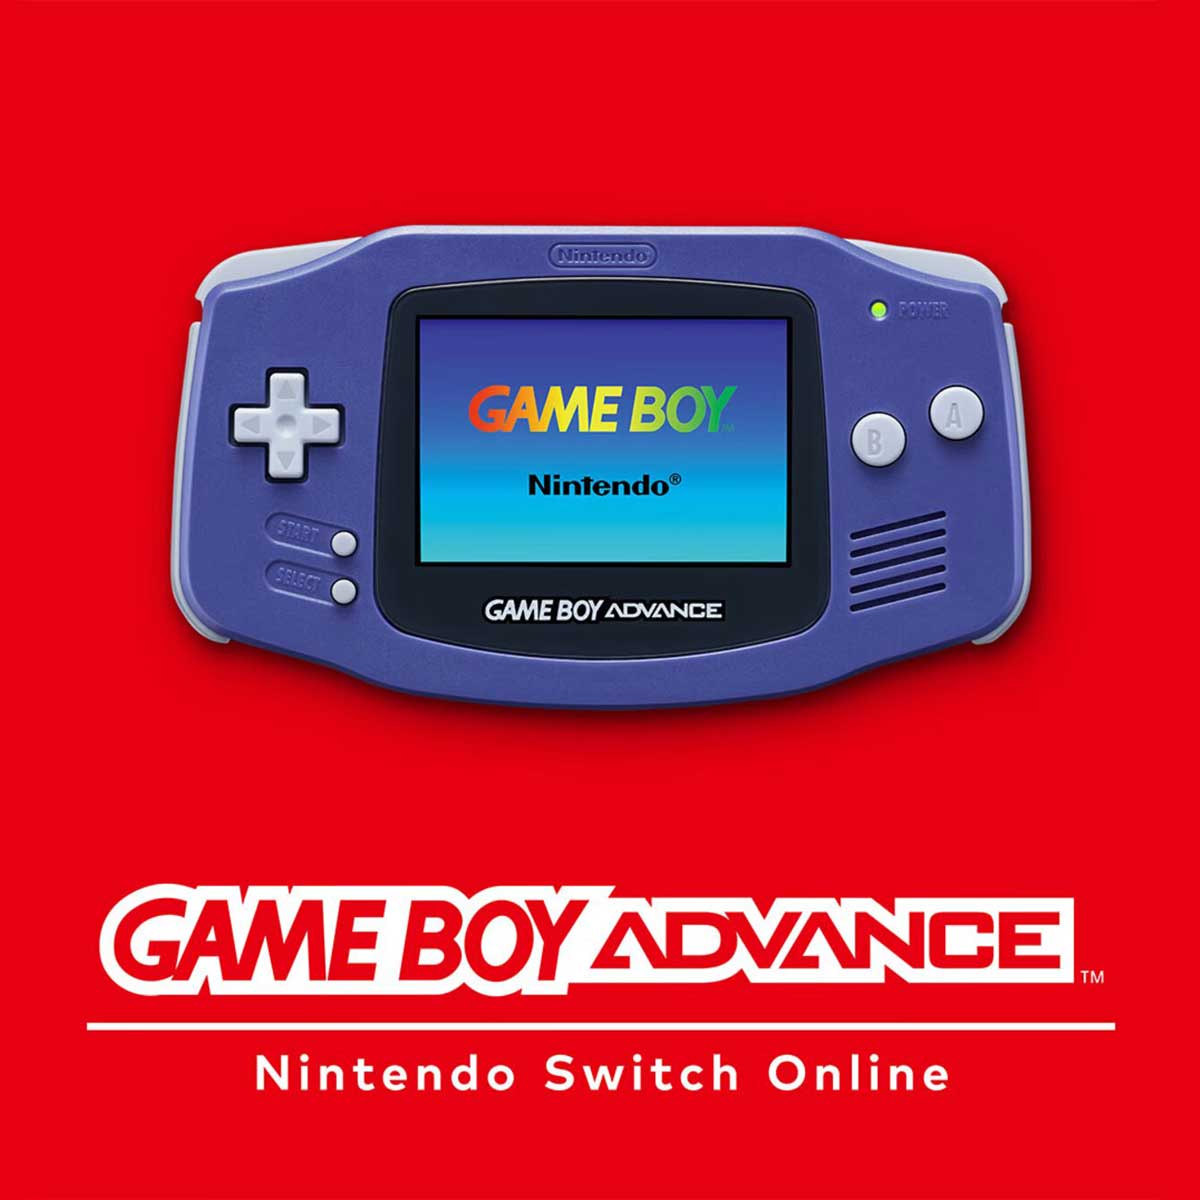 Game Boy - Nintendo Switch Online adds The Legend of Zelda: Oracle